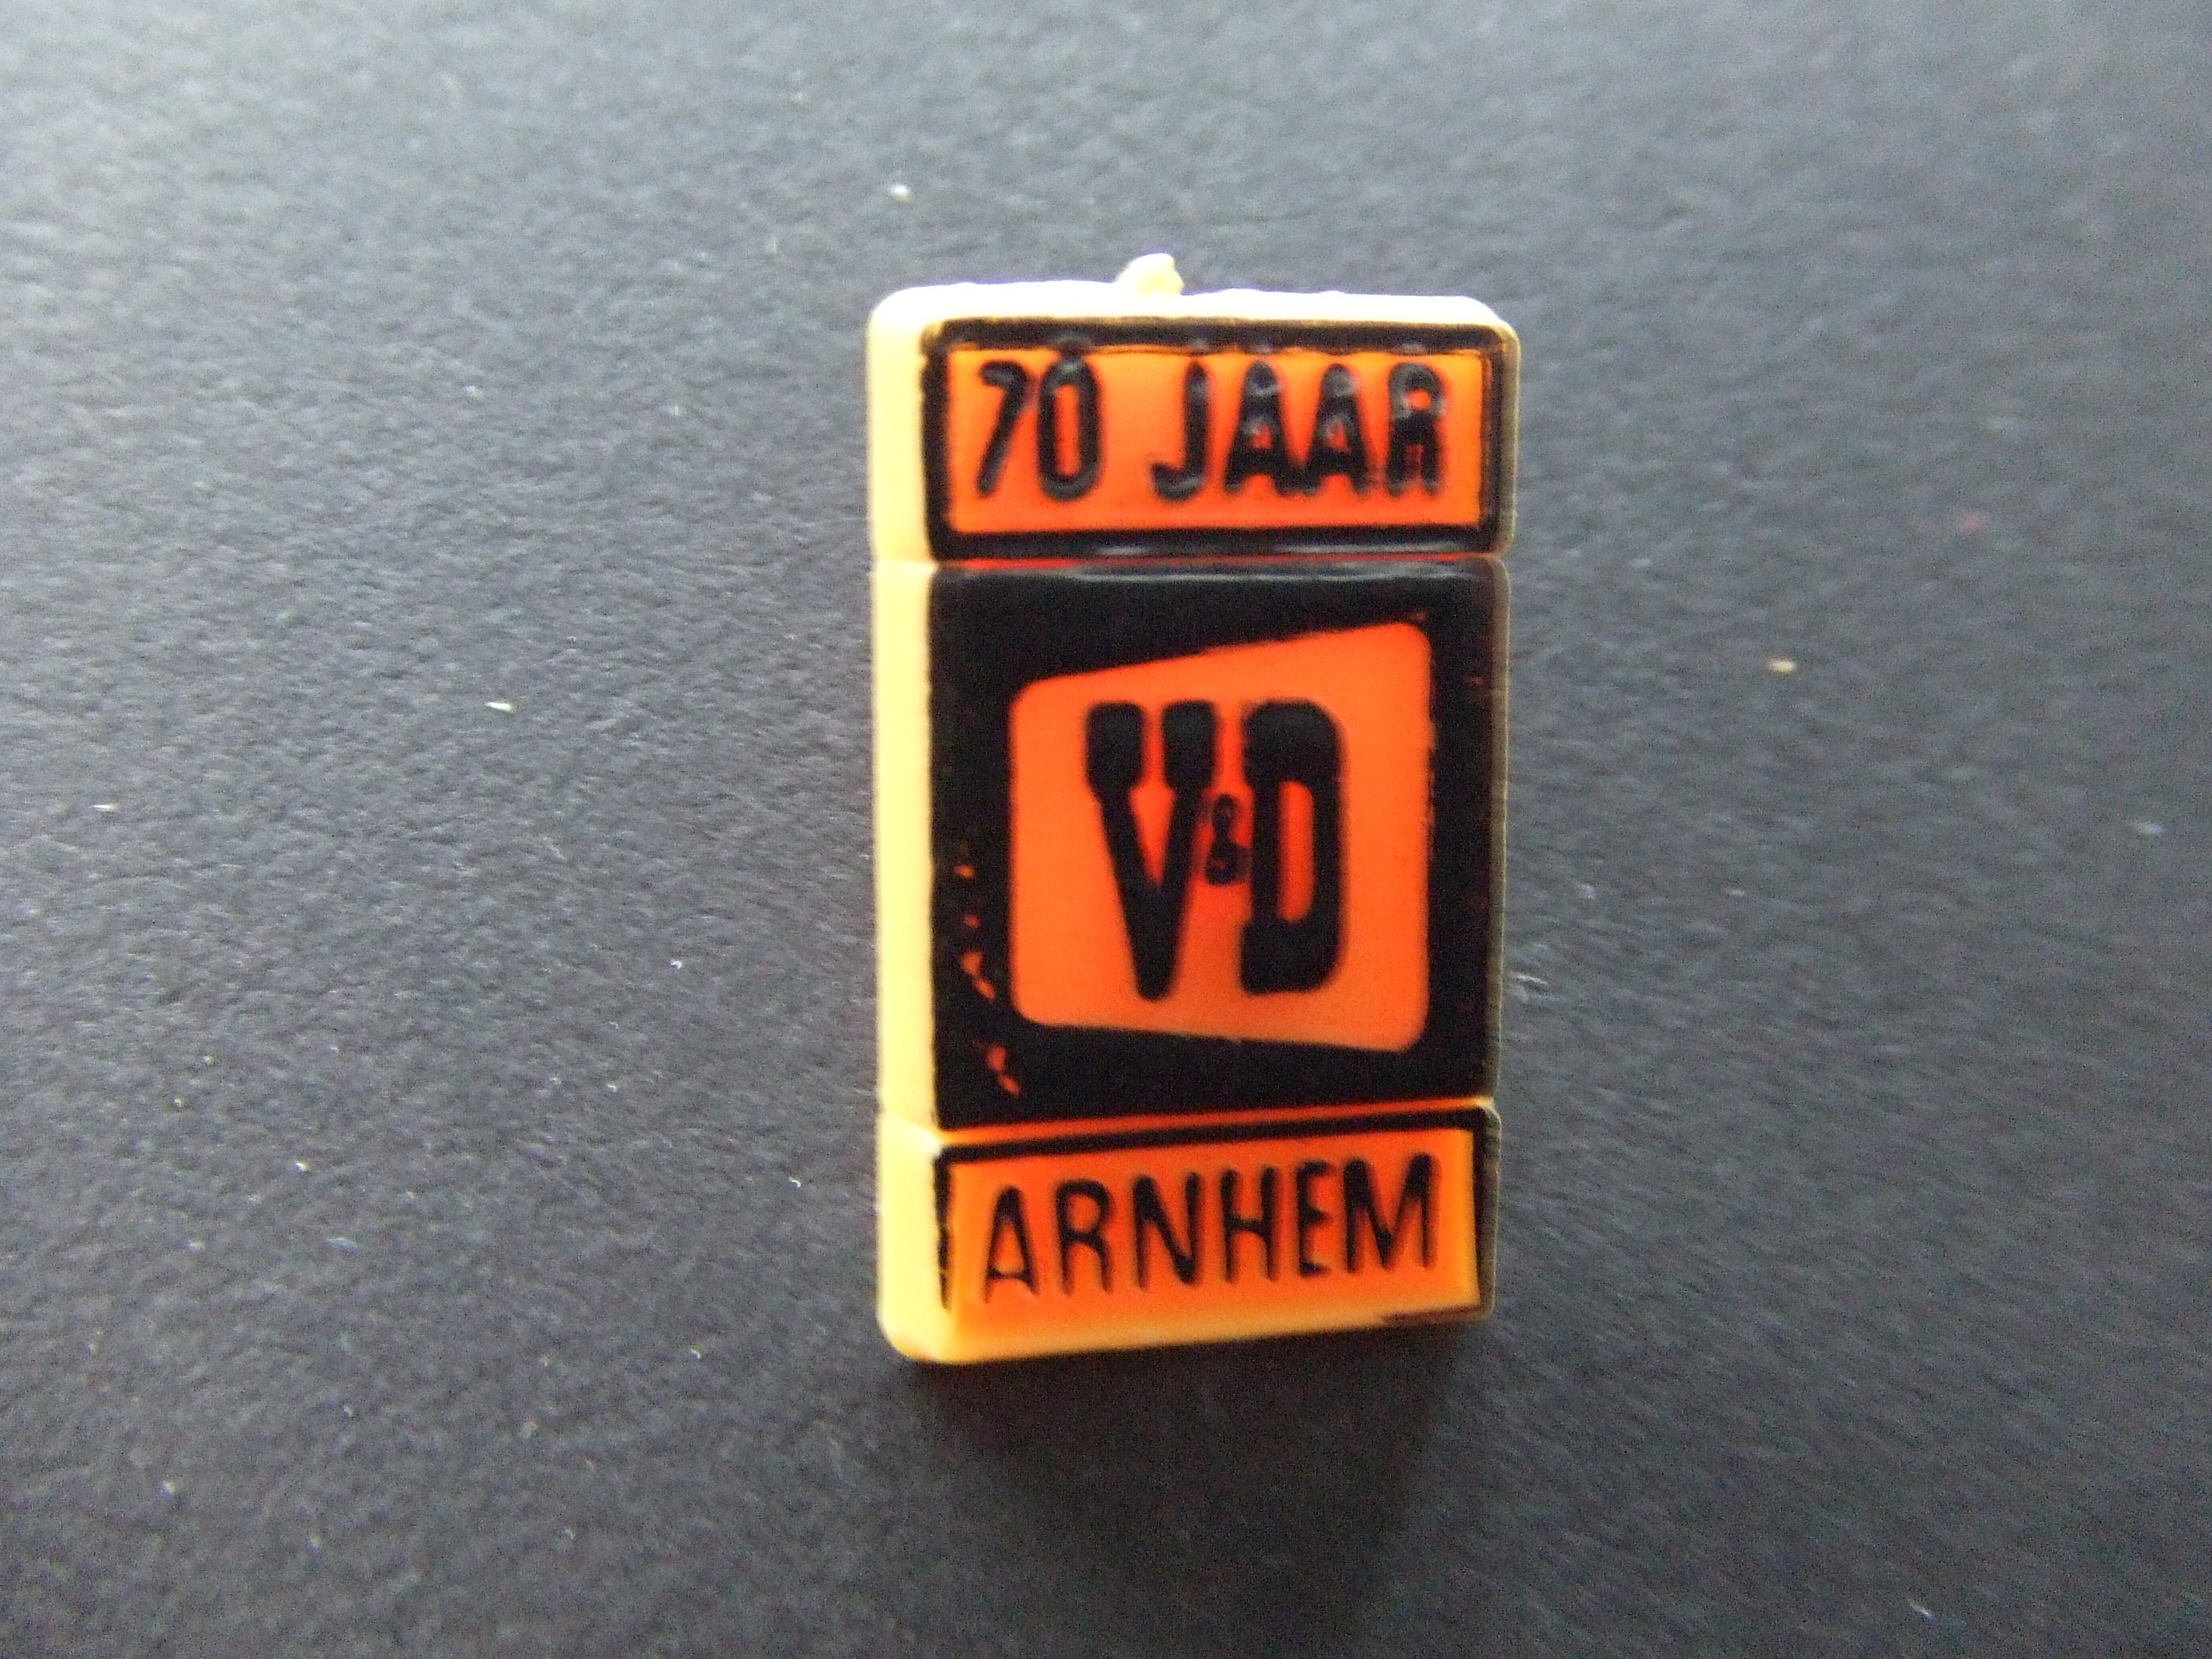 V&d Vroom & Dreesman Arnhem 70 jaar jubileum